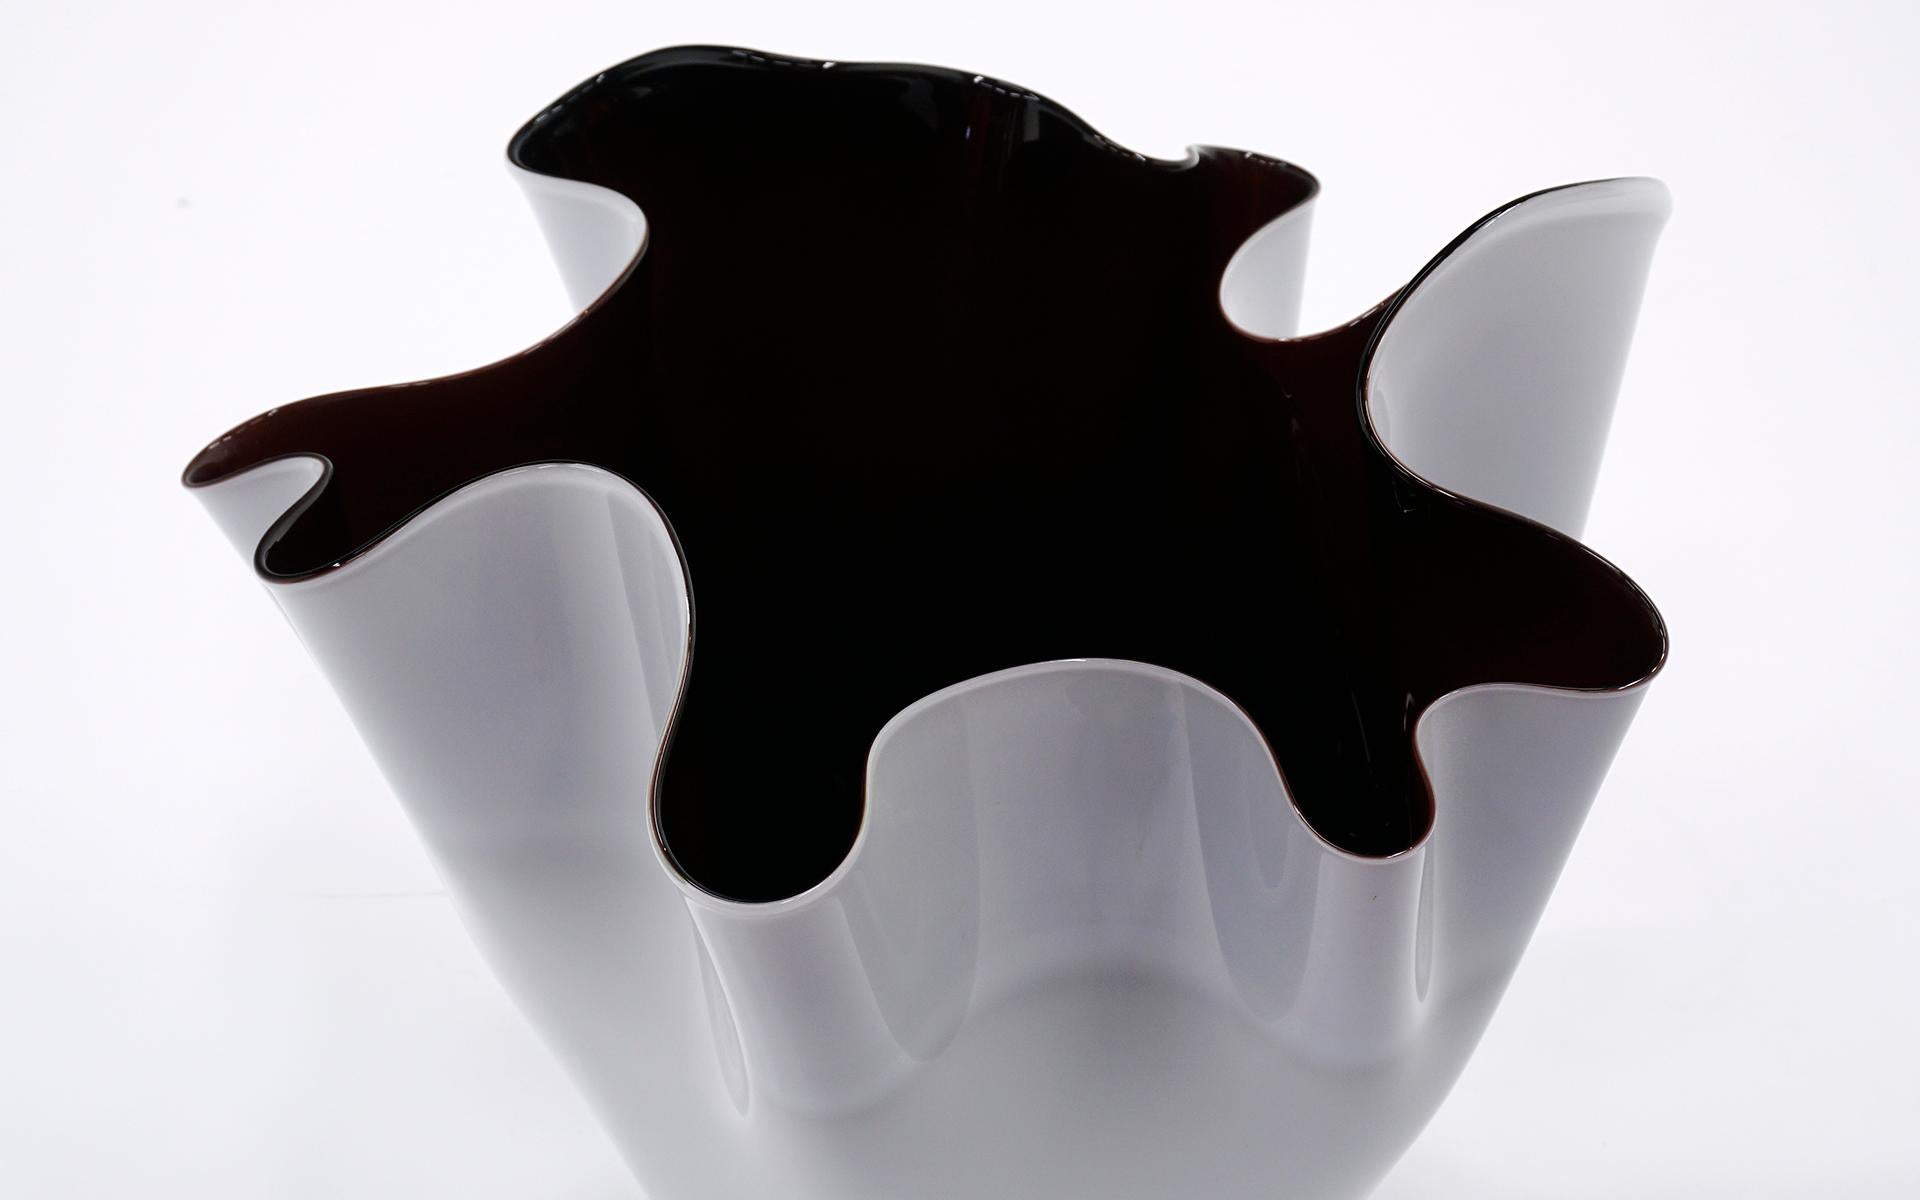 Mid-Century Modern Large Venini Hankerchief Artglass / Glass Bowl / Vase, Almost Black and White